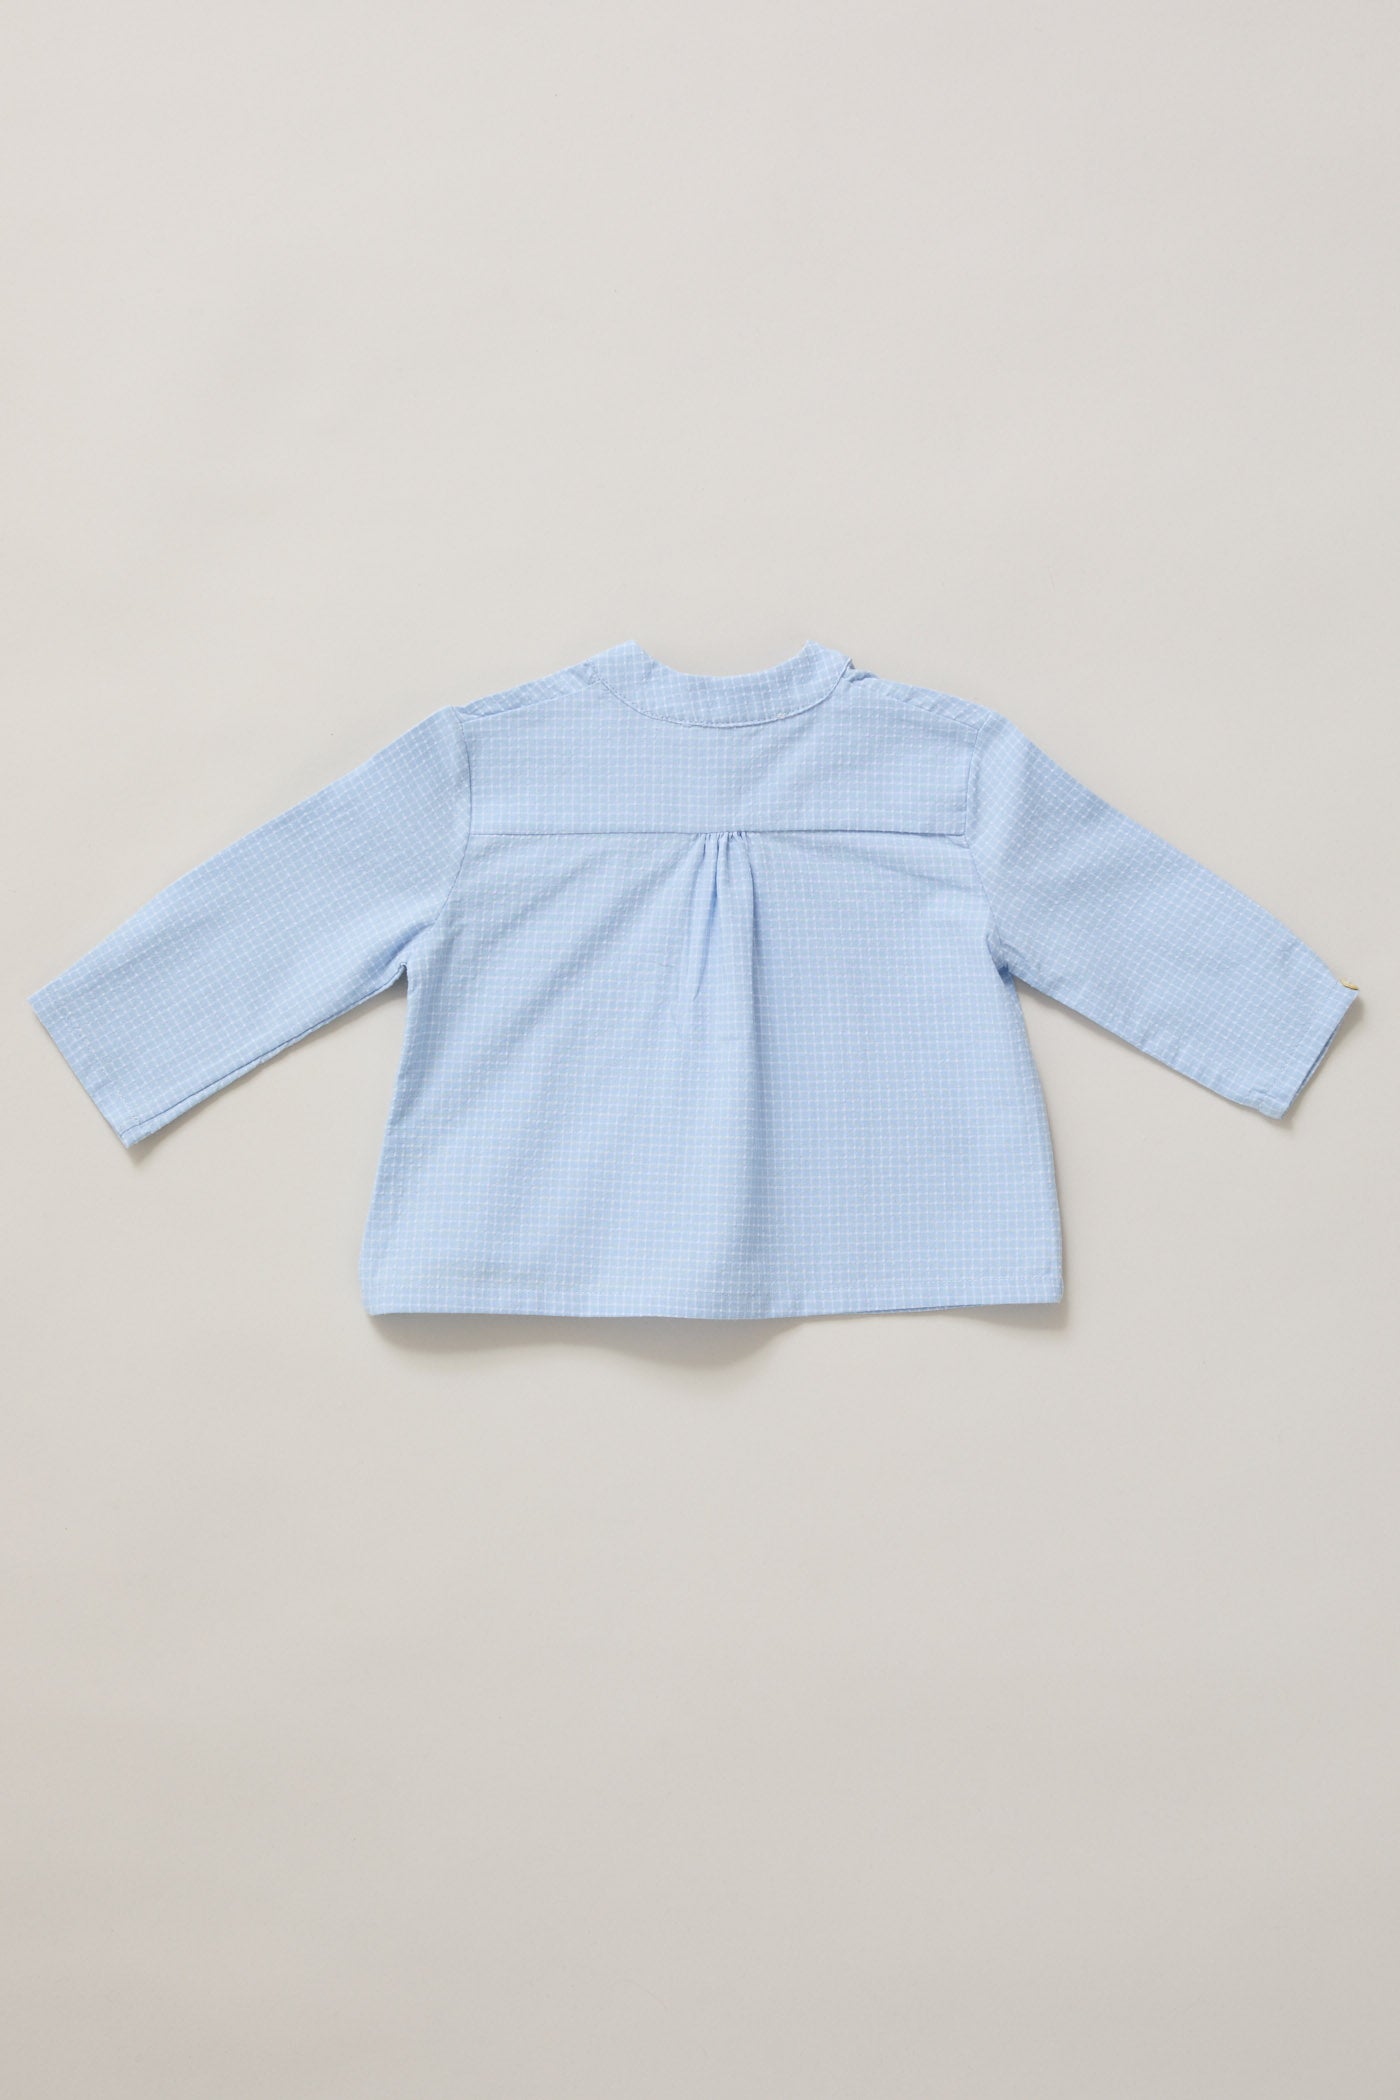 Light Blue Check Baby Apple Shirt